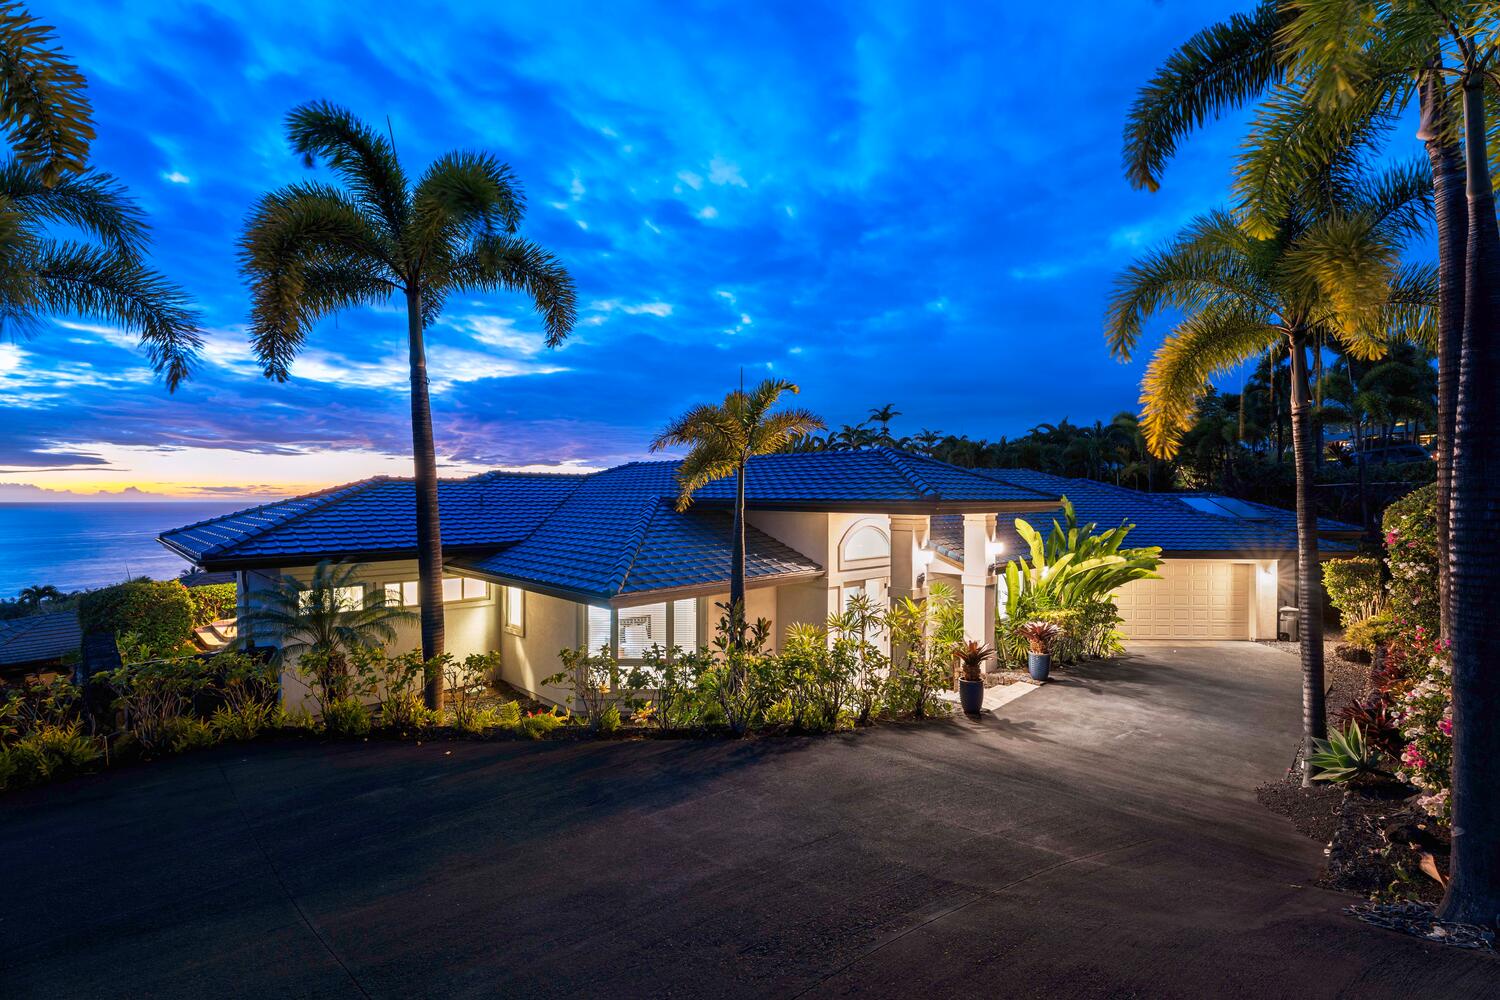 Kailua Kona Vacation Rentals, Blue Hawaii - 